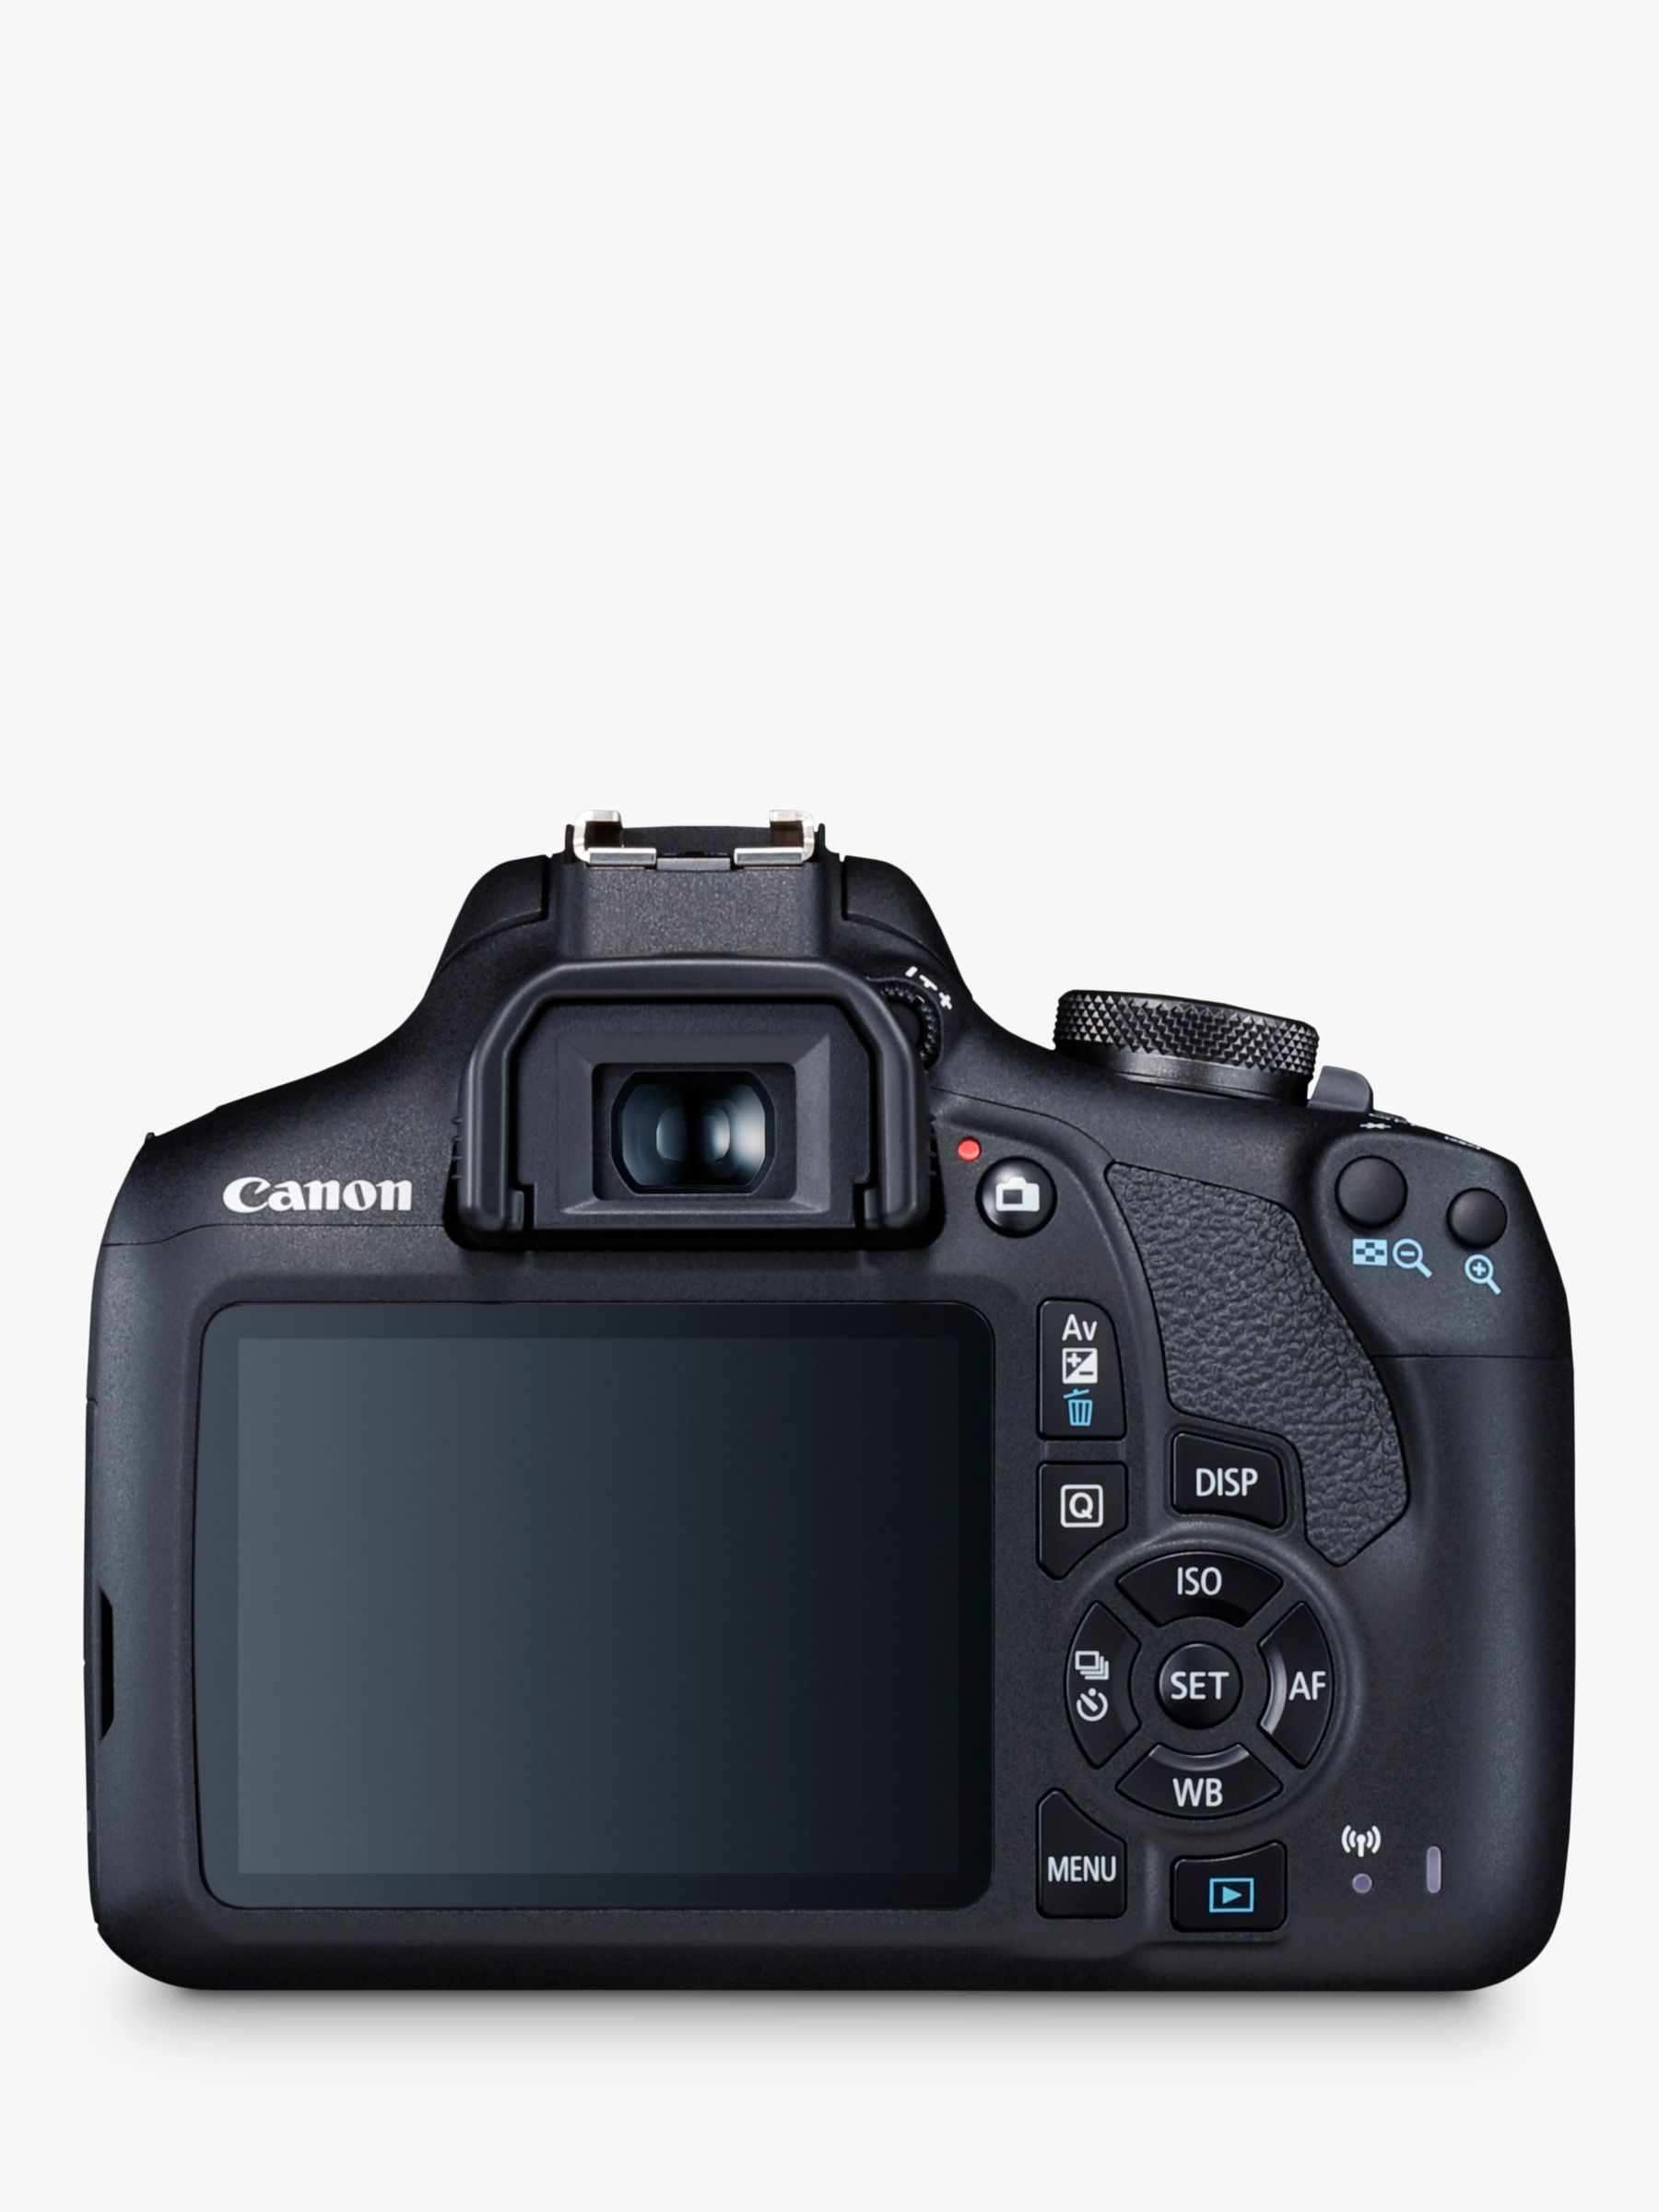 Canon EOS 2000D Digital Cameras for Sale, Shop New & Used Digital Cameras